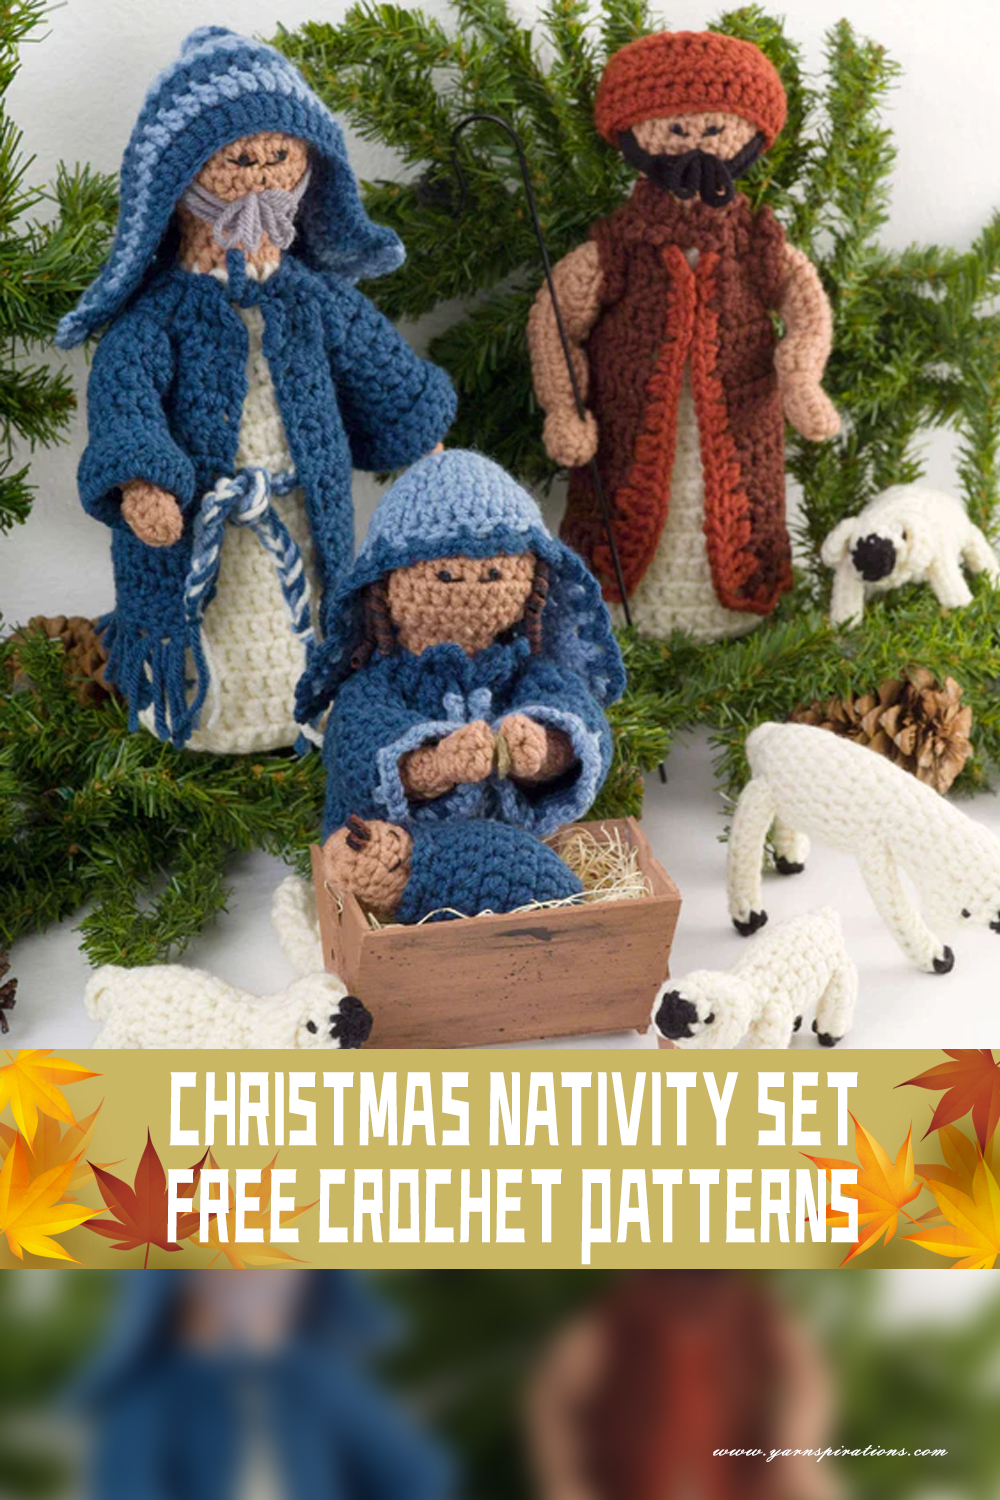 8 Christmas Nativity Set Crochet Patterns - FREE - iGOODideas.com